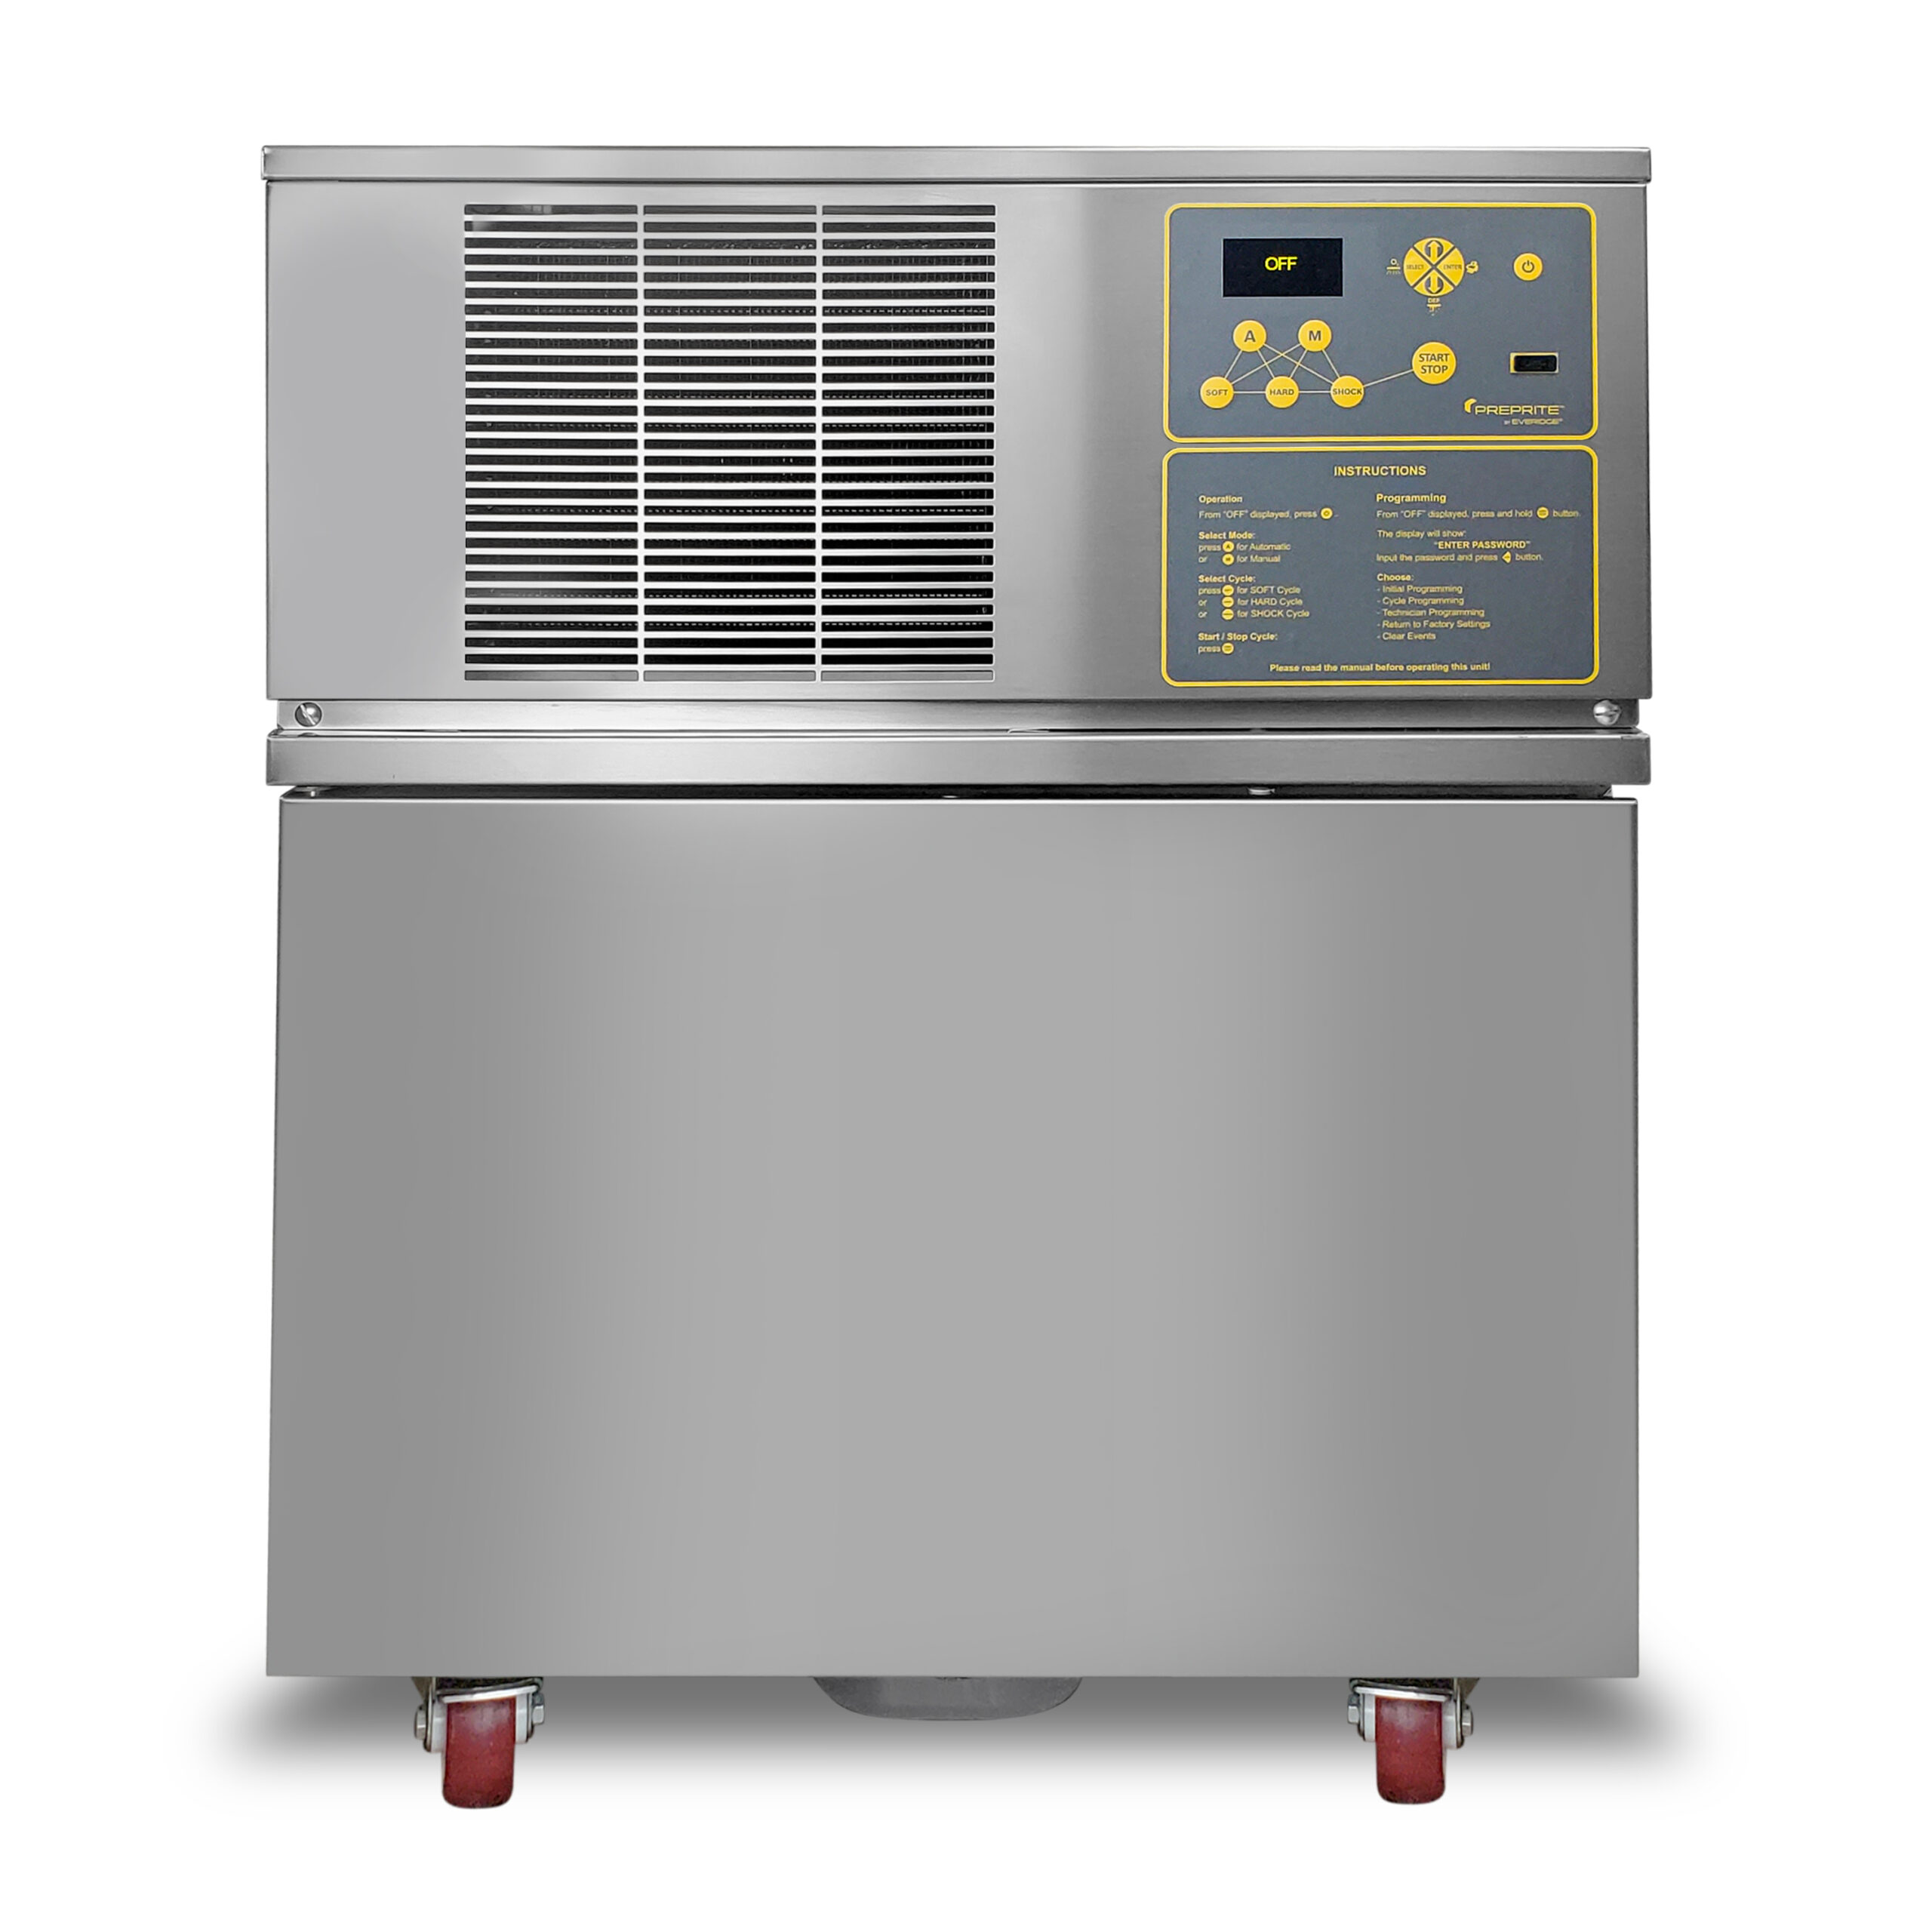 PrepRite PBF 4.0 Undercounter Blast Chiller/Freezer - 4/5 Pan - R290 Refrigerant - Stainless Steel Image